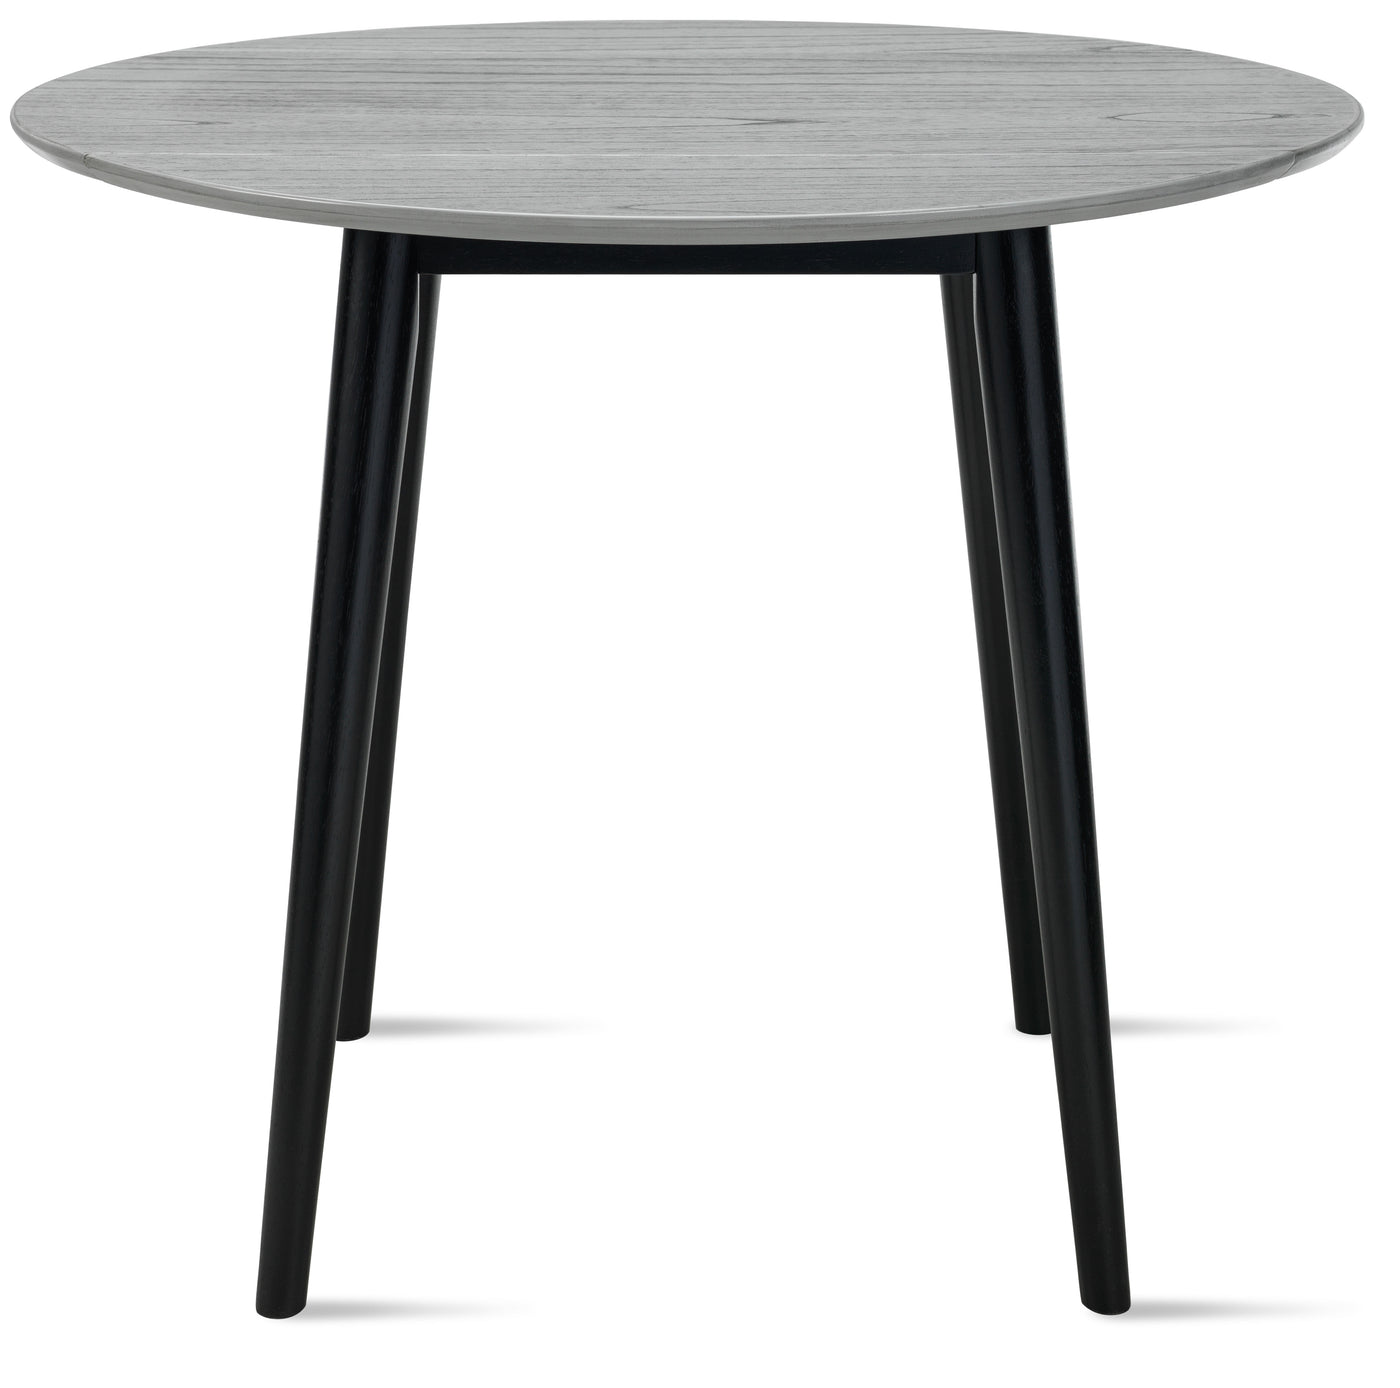 Midland Dining Table with Drop Leaf - Grey, Black